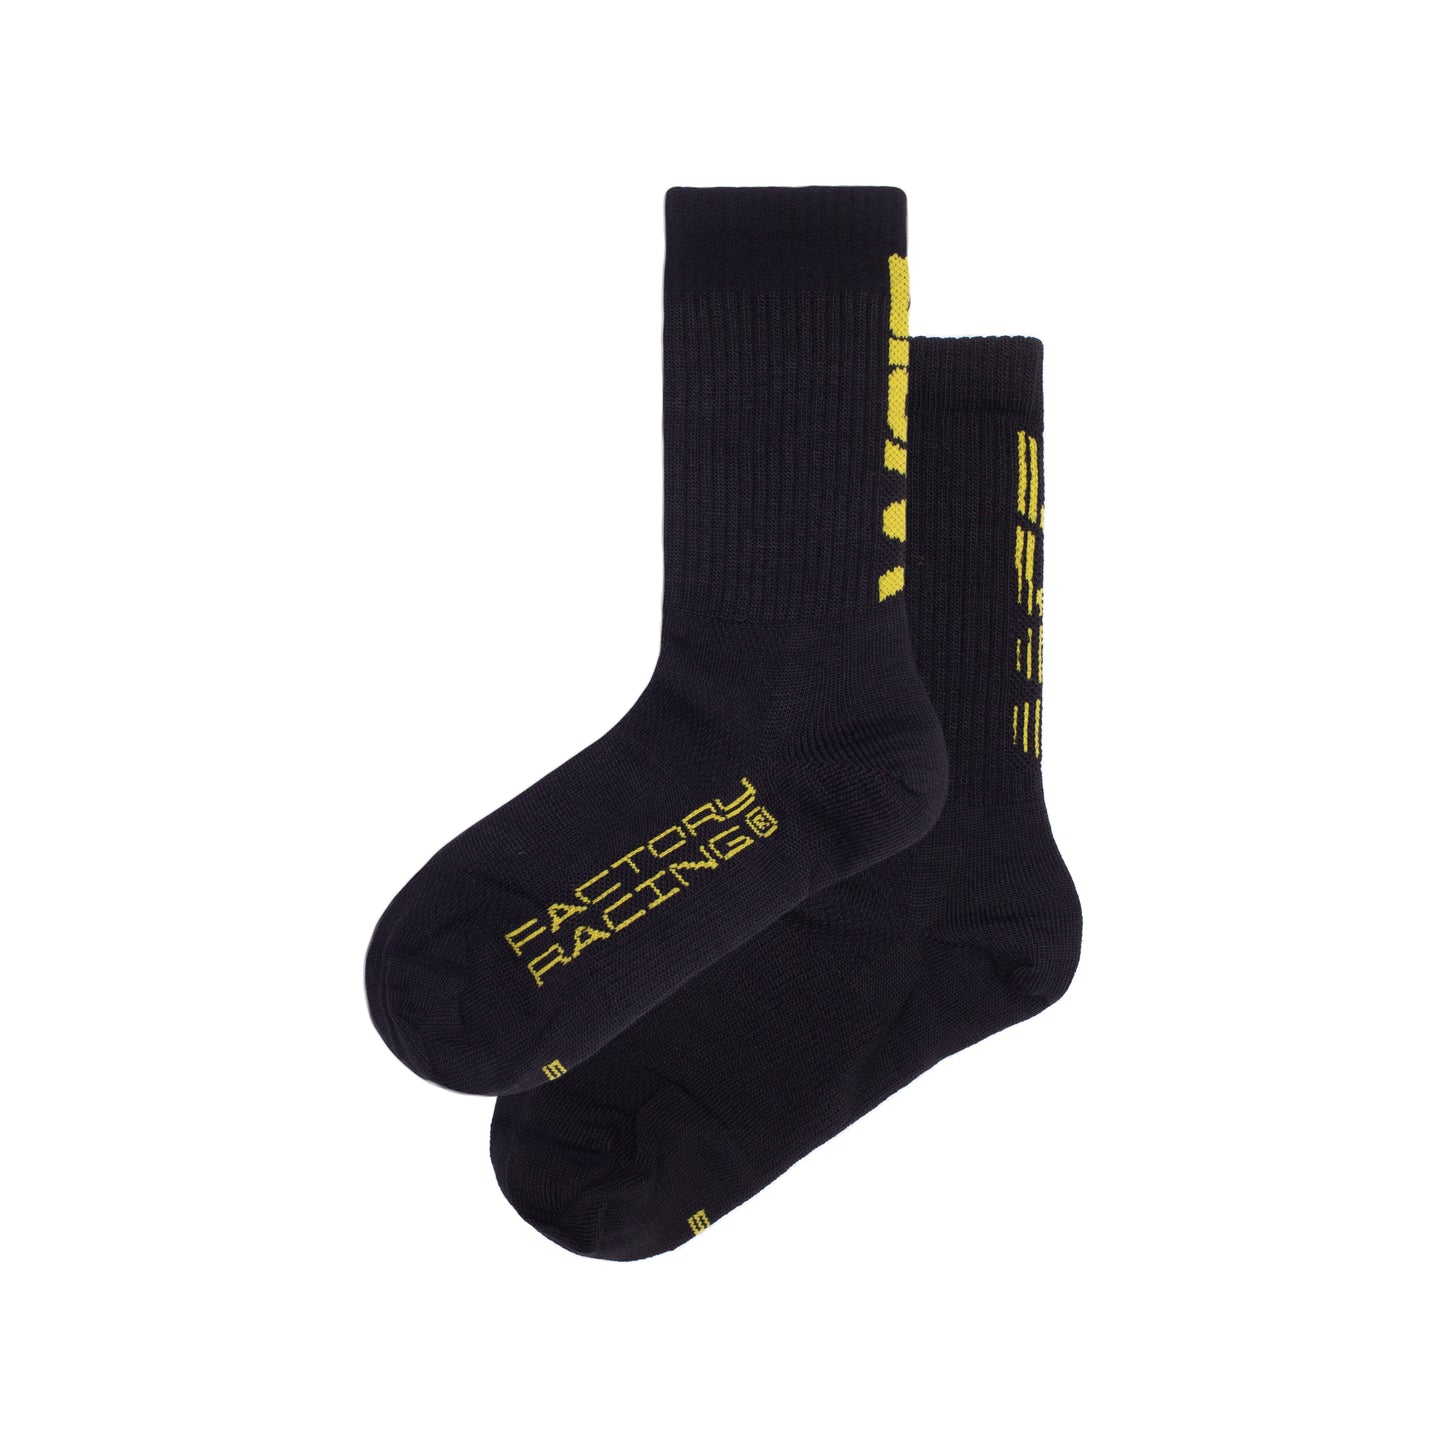 Factory Racing Socks